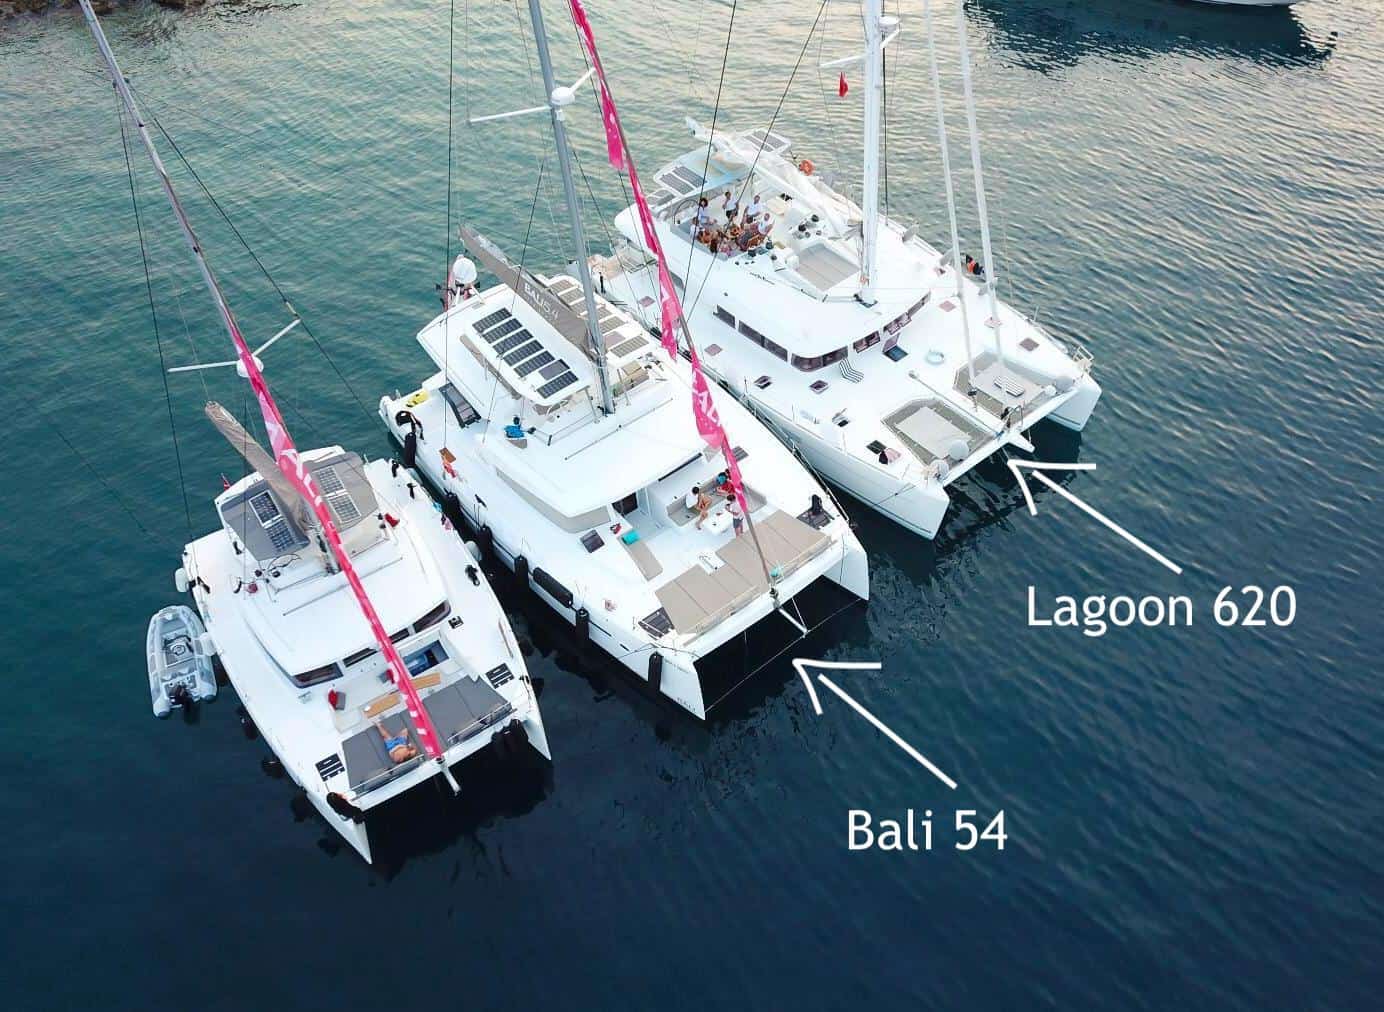 comparaisons de catamarans Bali 5.4